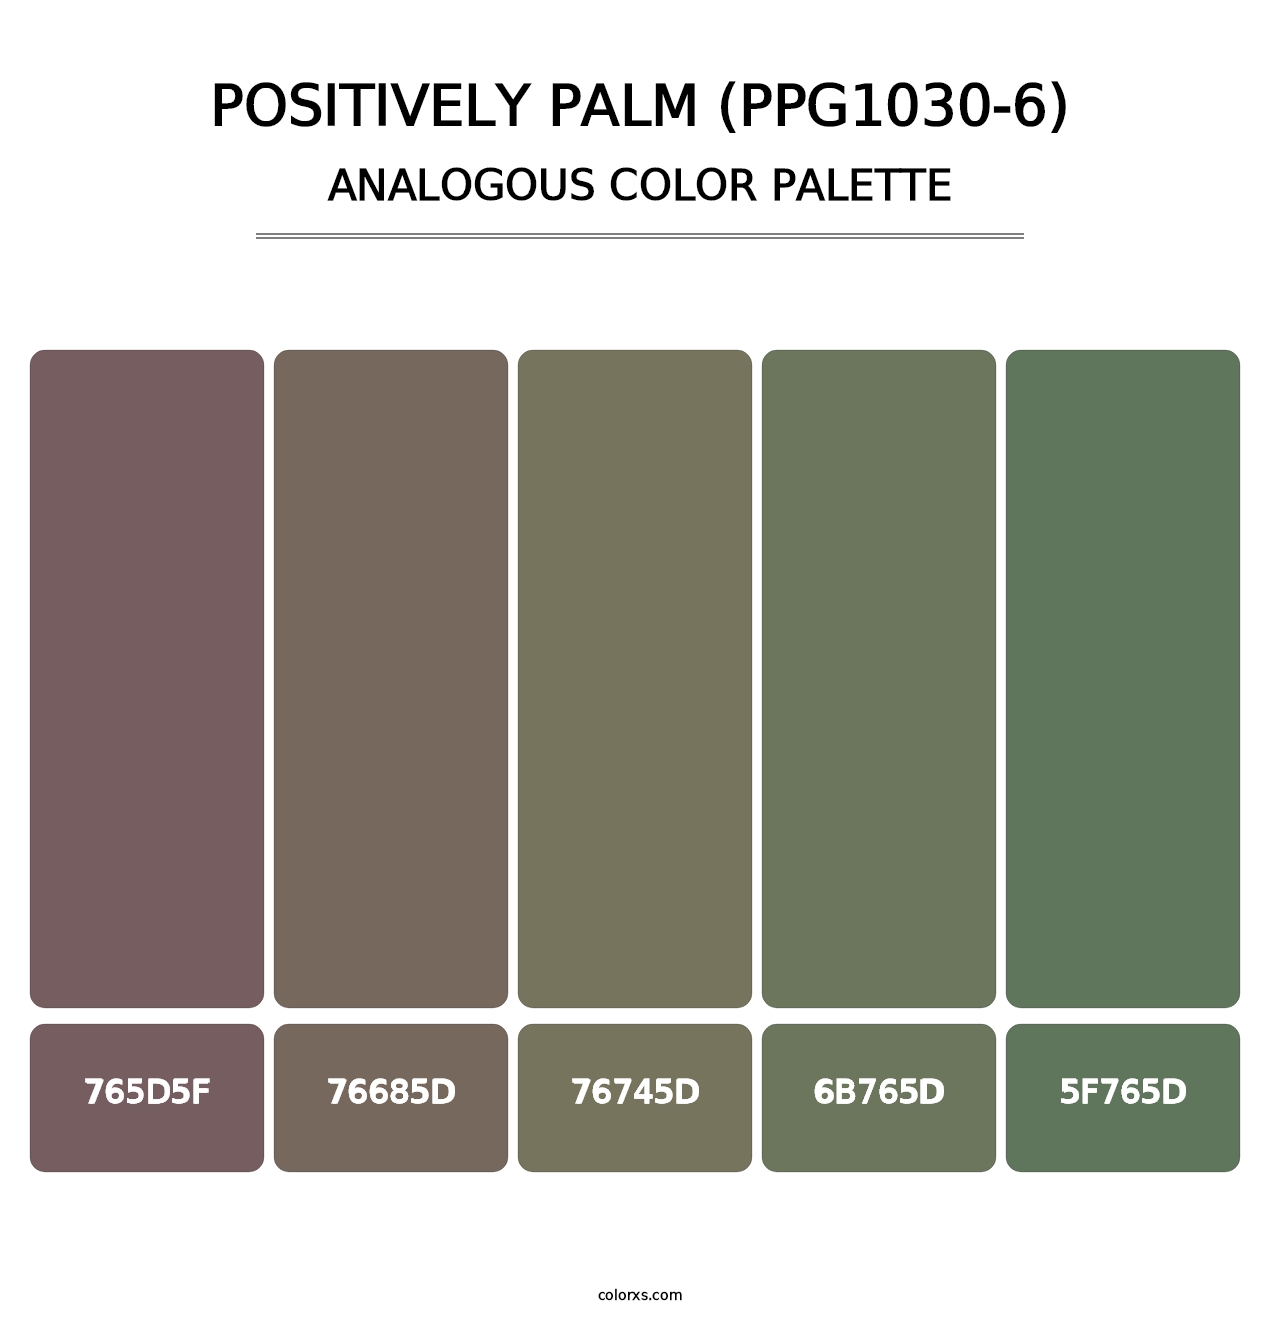 Positively Palm (PPG1030-6) - Analogous Color Palette